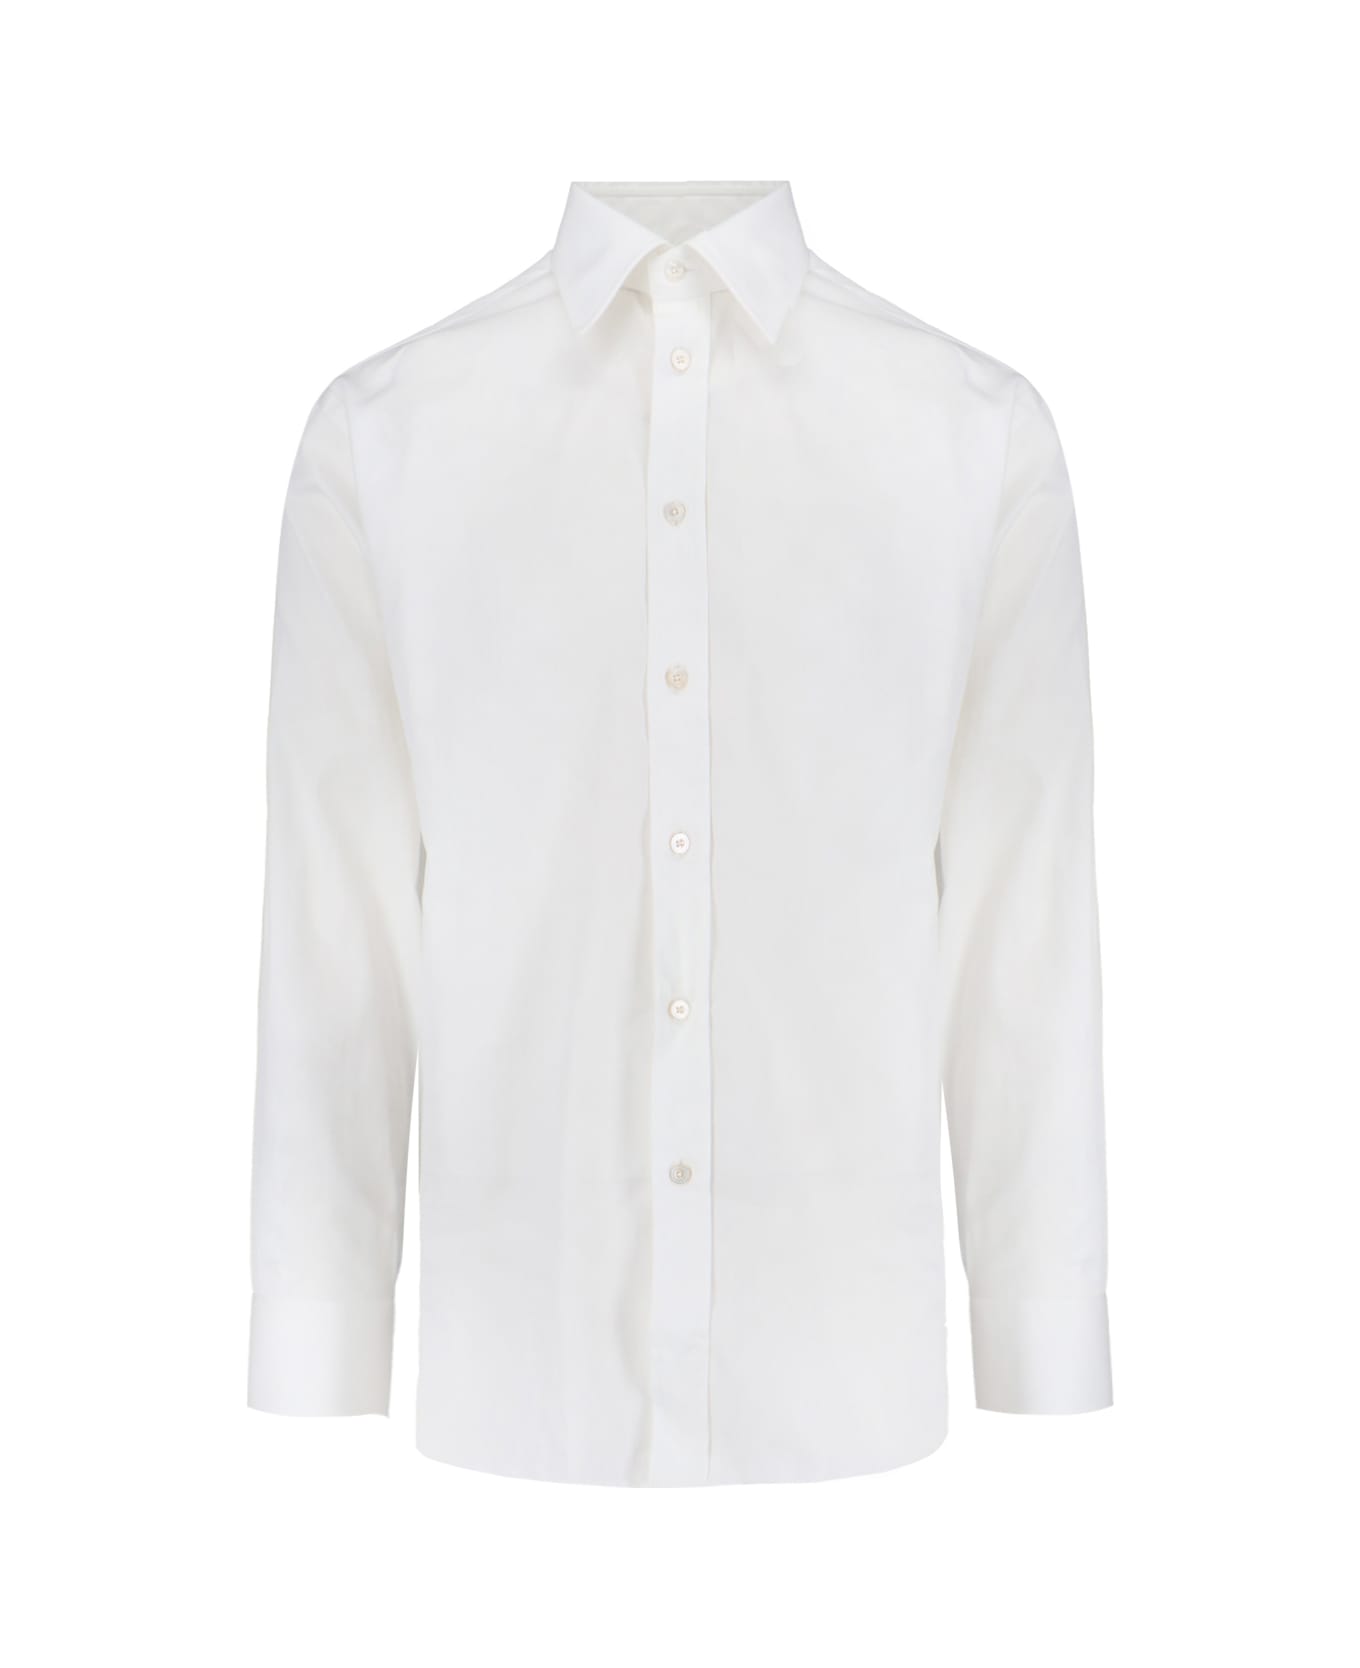 Tom Ford Classic Shirt - White シャツ